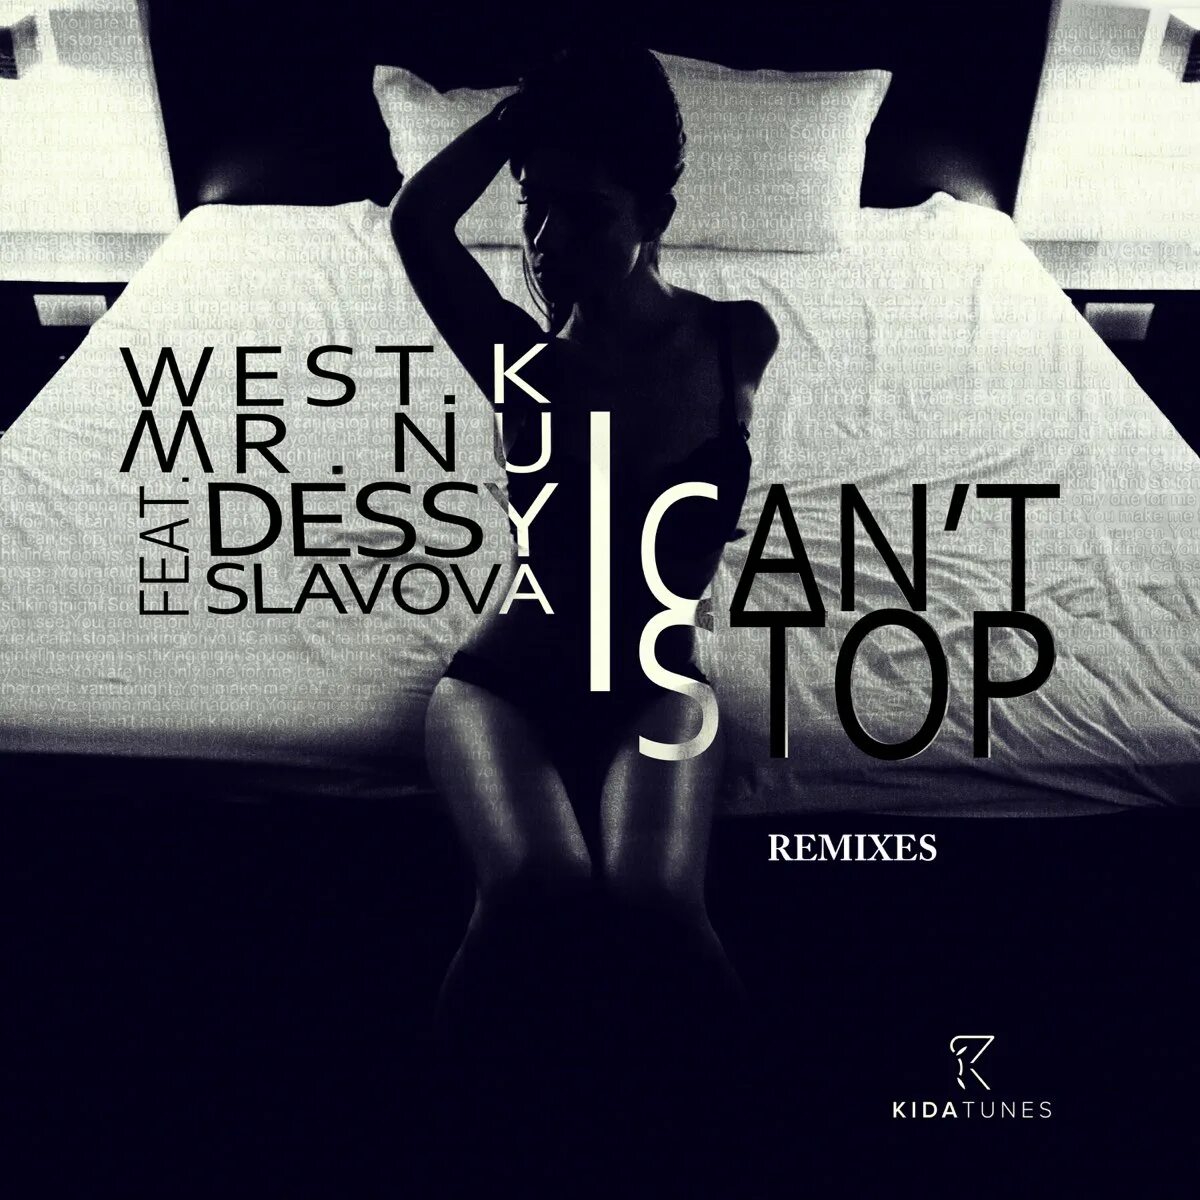 Стоп ремикс. I can't stop. Обложка альбома Mr.k. I can't stop Remix. K West.